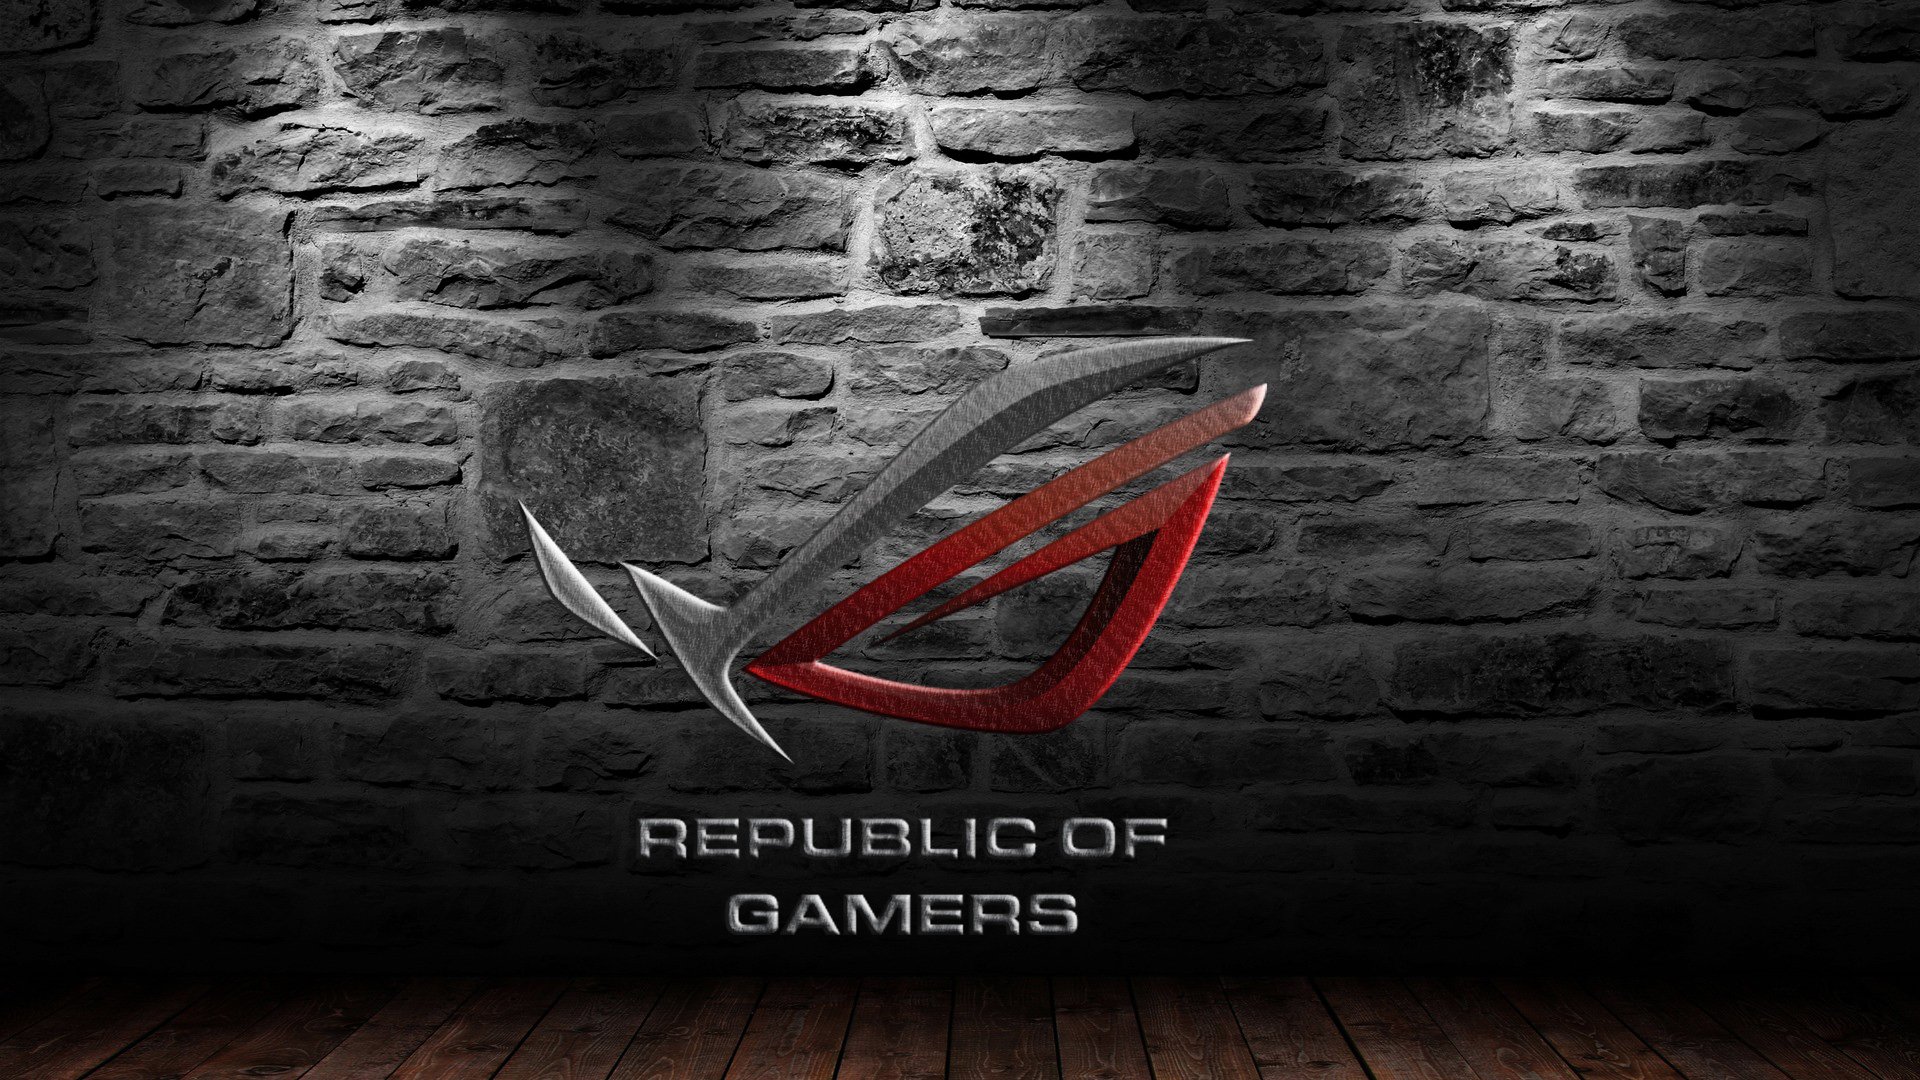 asus rog republic of gamers logo hd 1920x1080 1080p wallpaper and 1920x1080